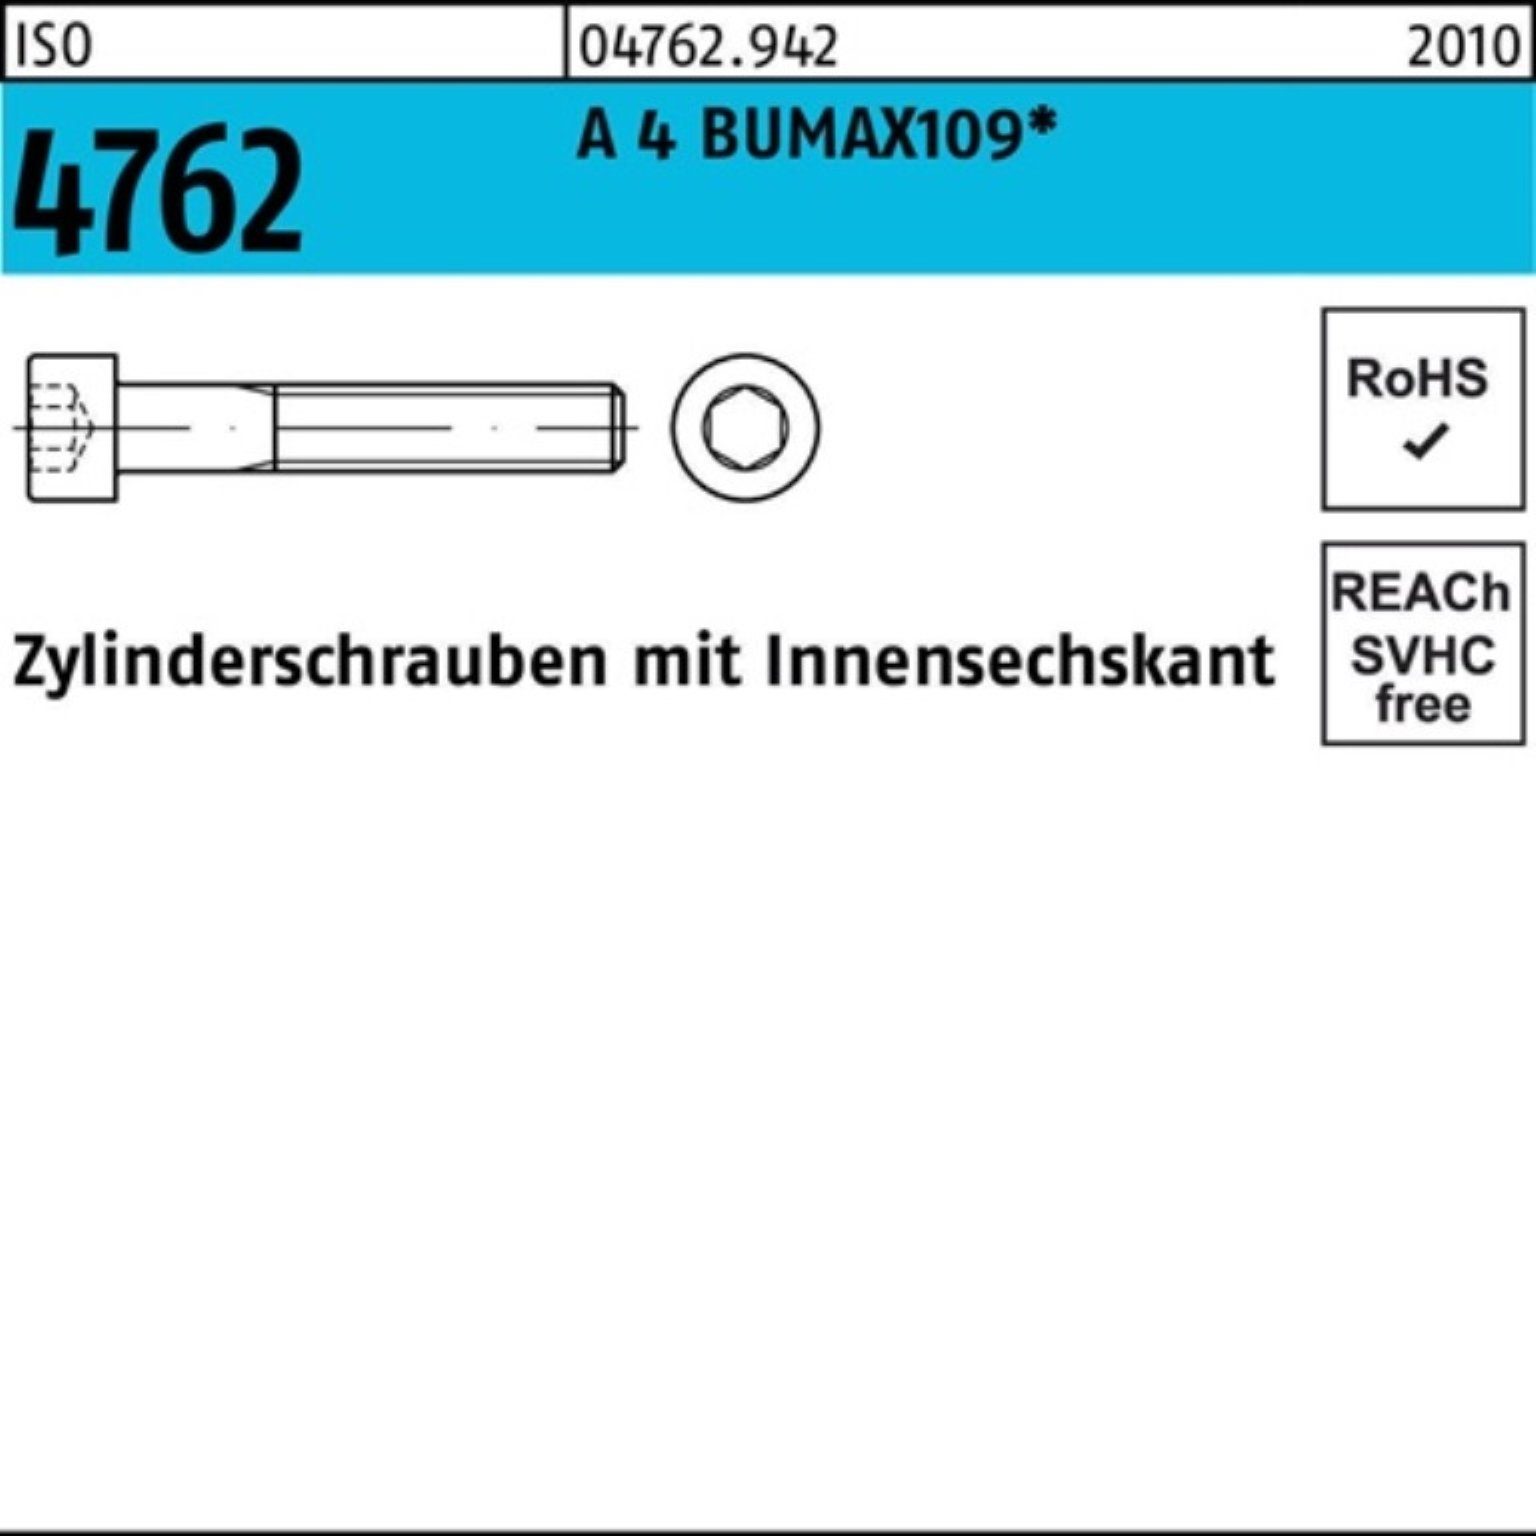 Zylinderschraube 4762 BUMAX109 Bufab ISO 60 M10x Pack 4 50 100er Zylinderschraube Innen-6kt A